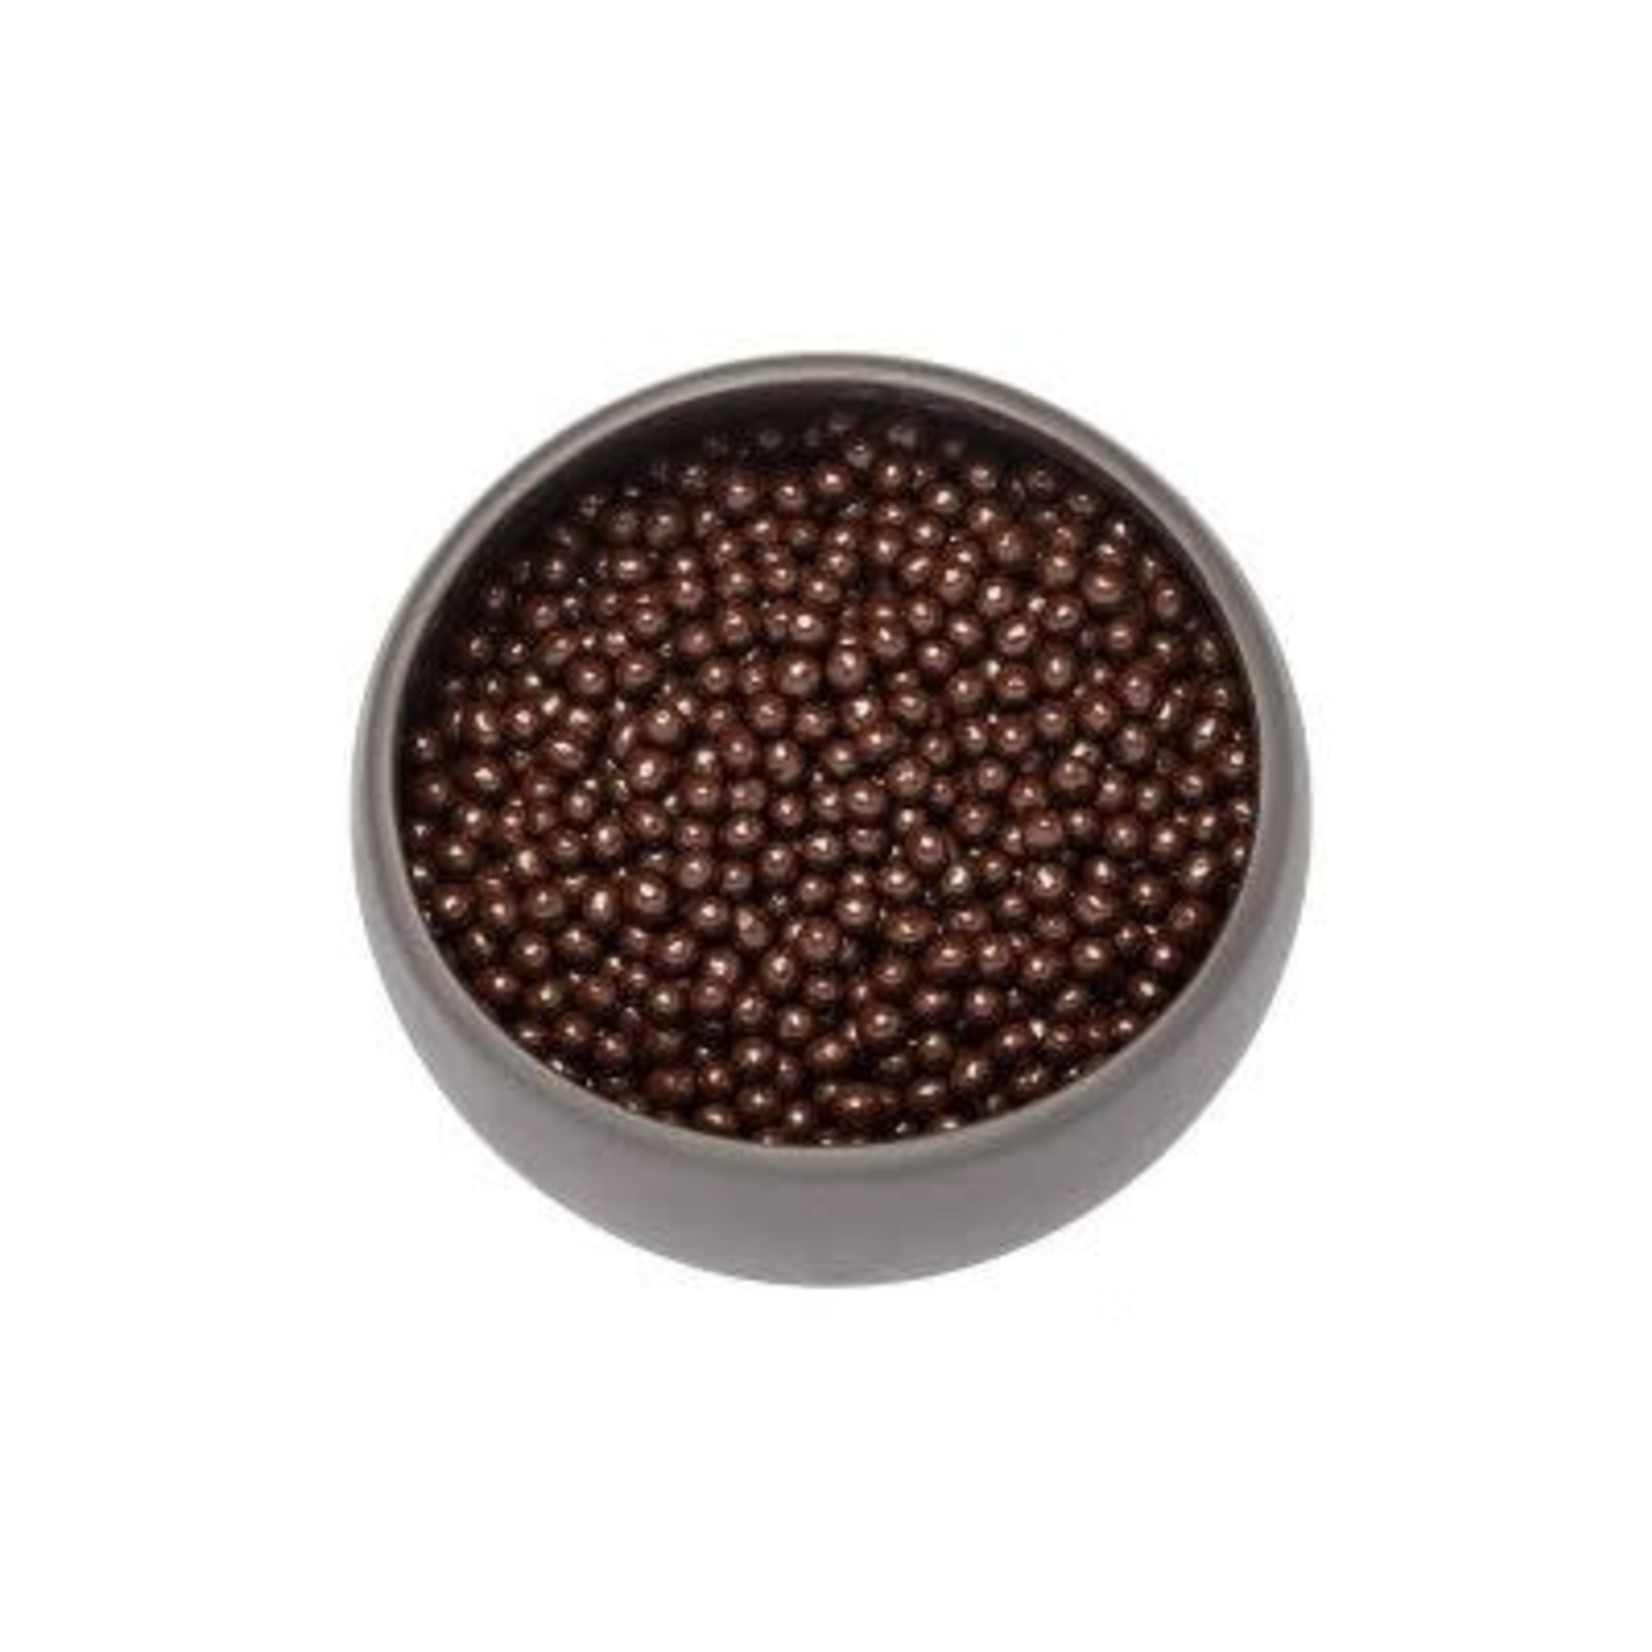 Valrhona Valrhona - Dark Chocolate Pearls, 55% - 3kg/6.6lb, 4719